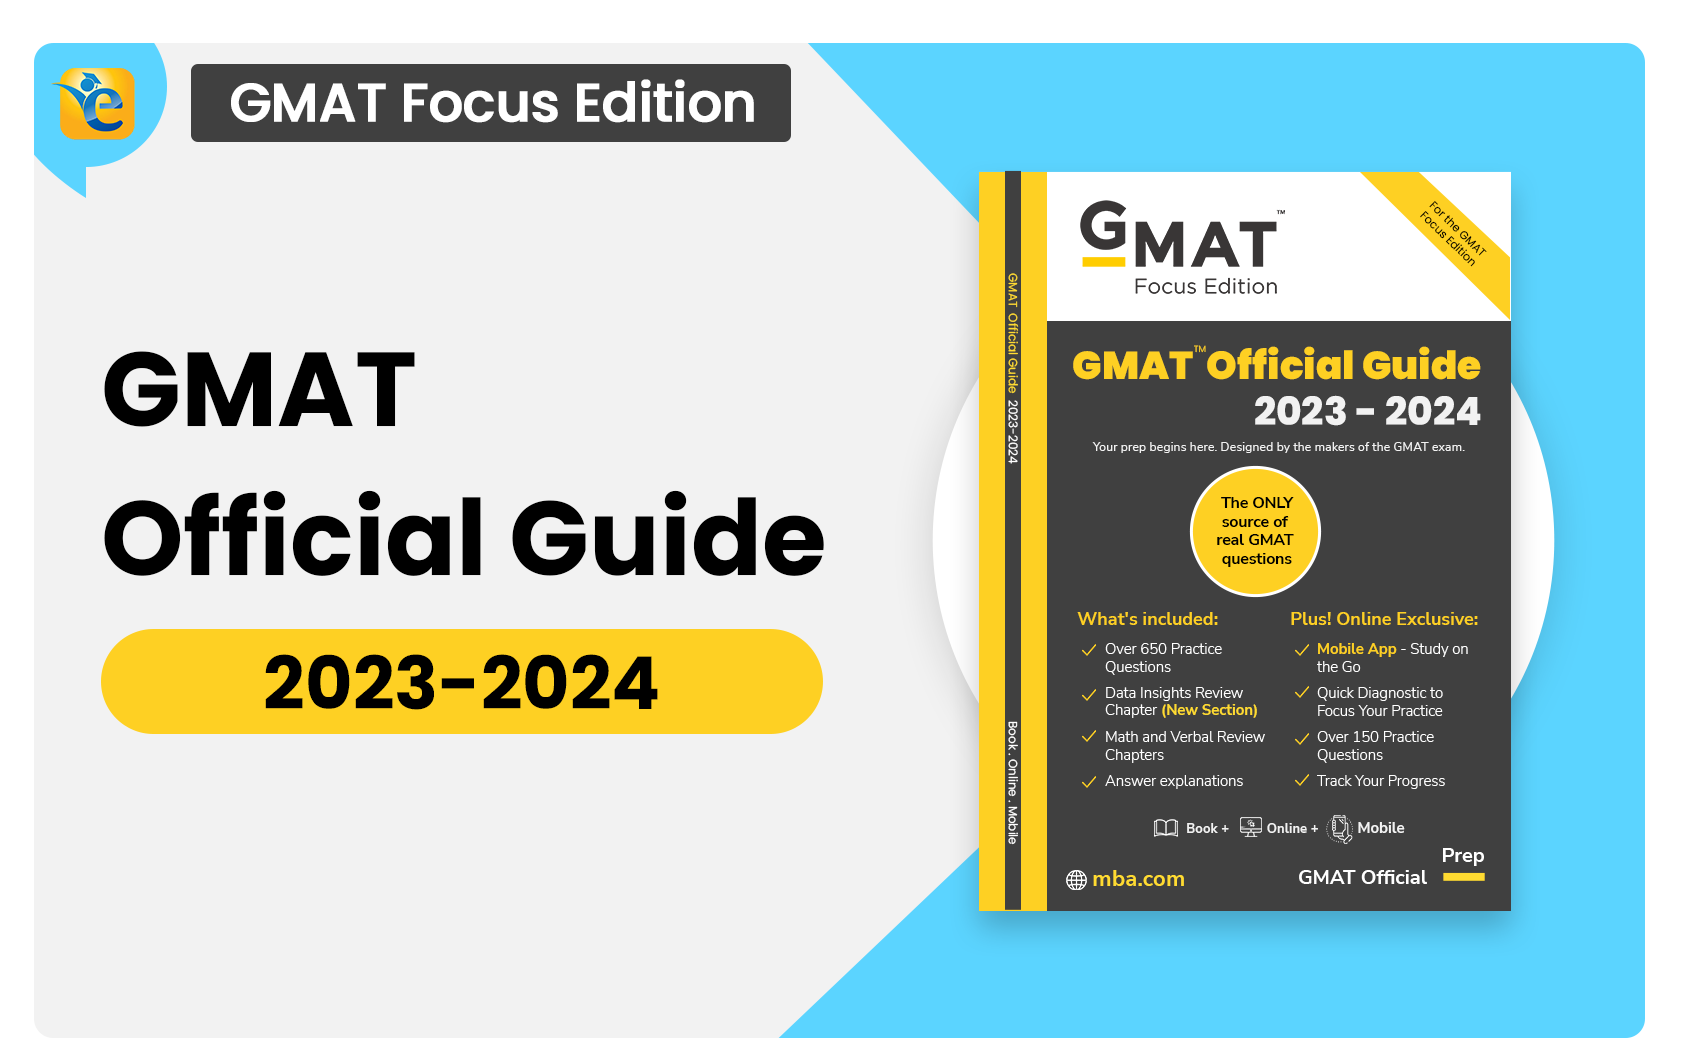 GMAT Official Guide Quantitative Review 2022: Book + Online